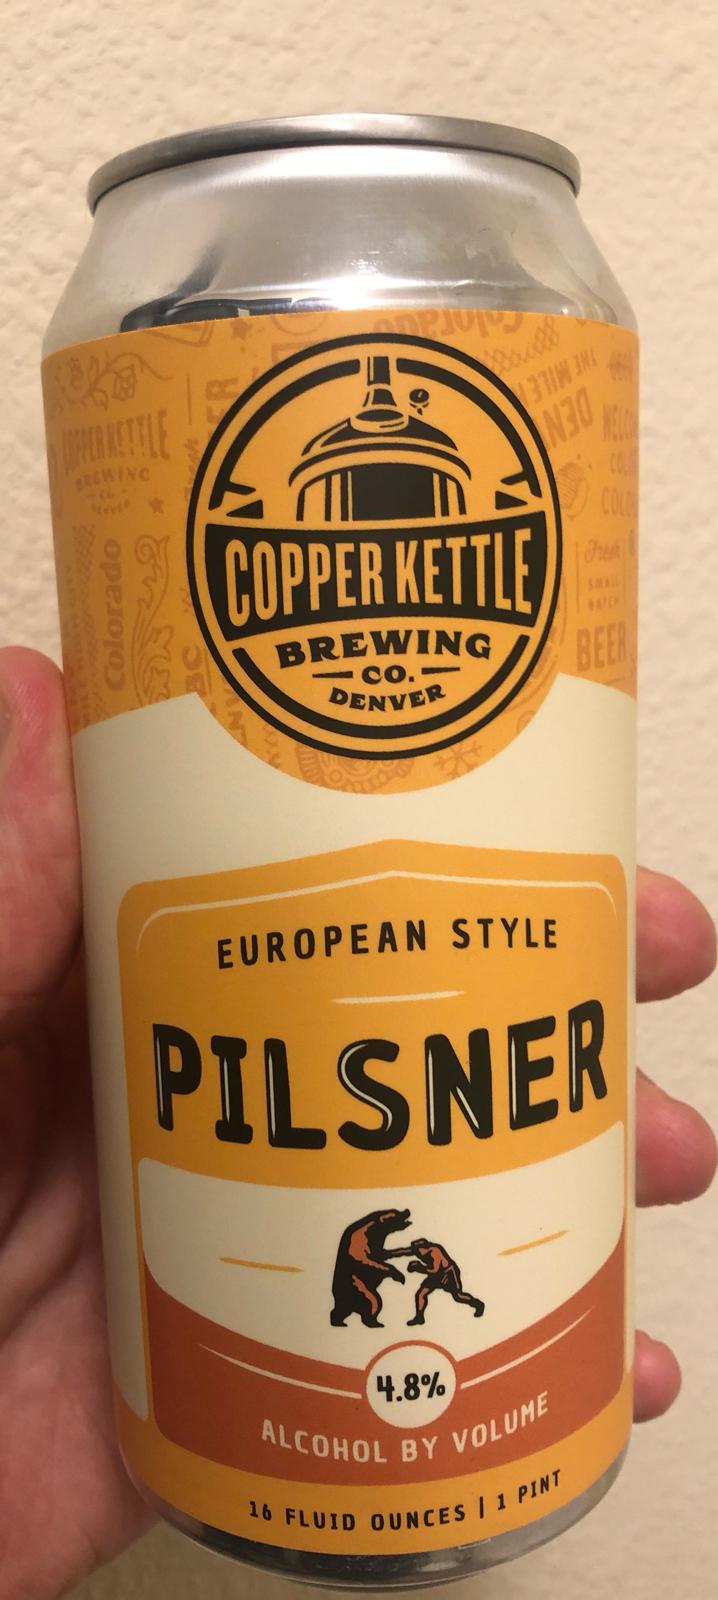 European Style Pilsner